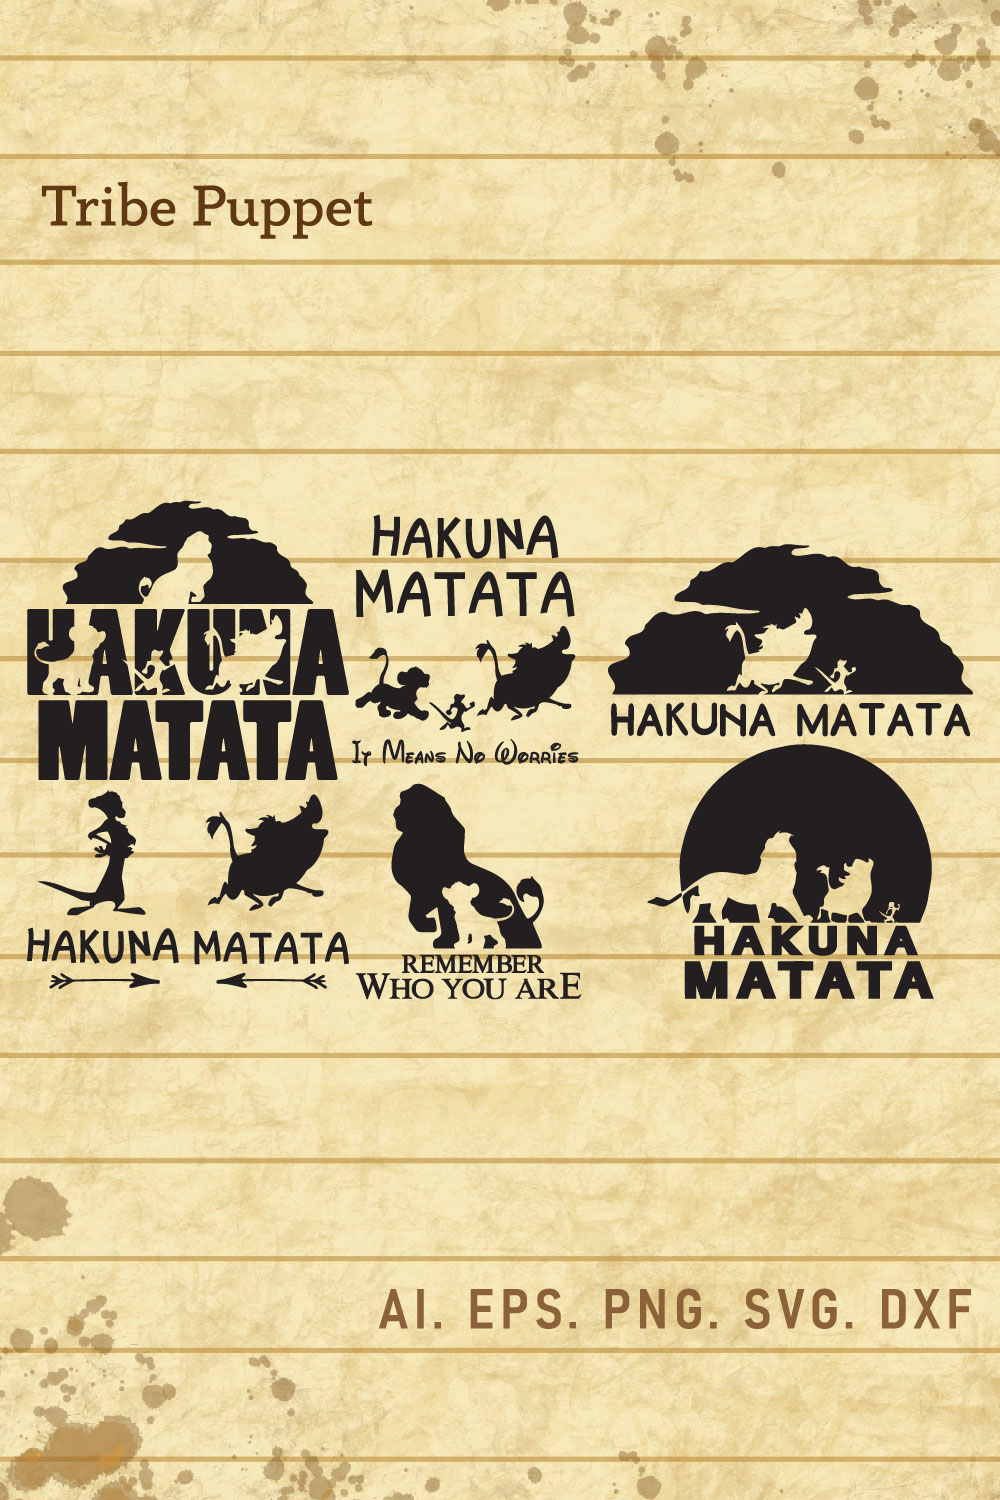 Hakuna Matata pinterest preview image.